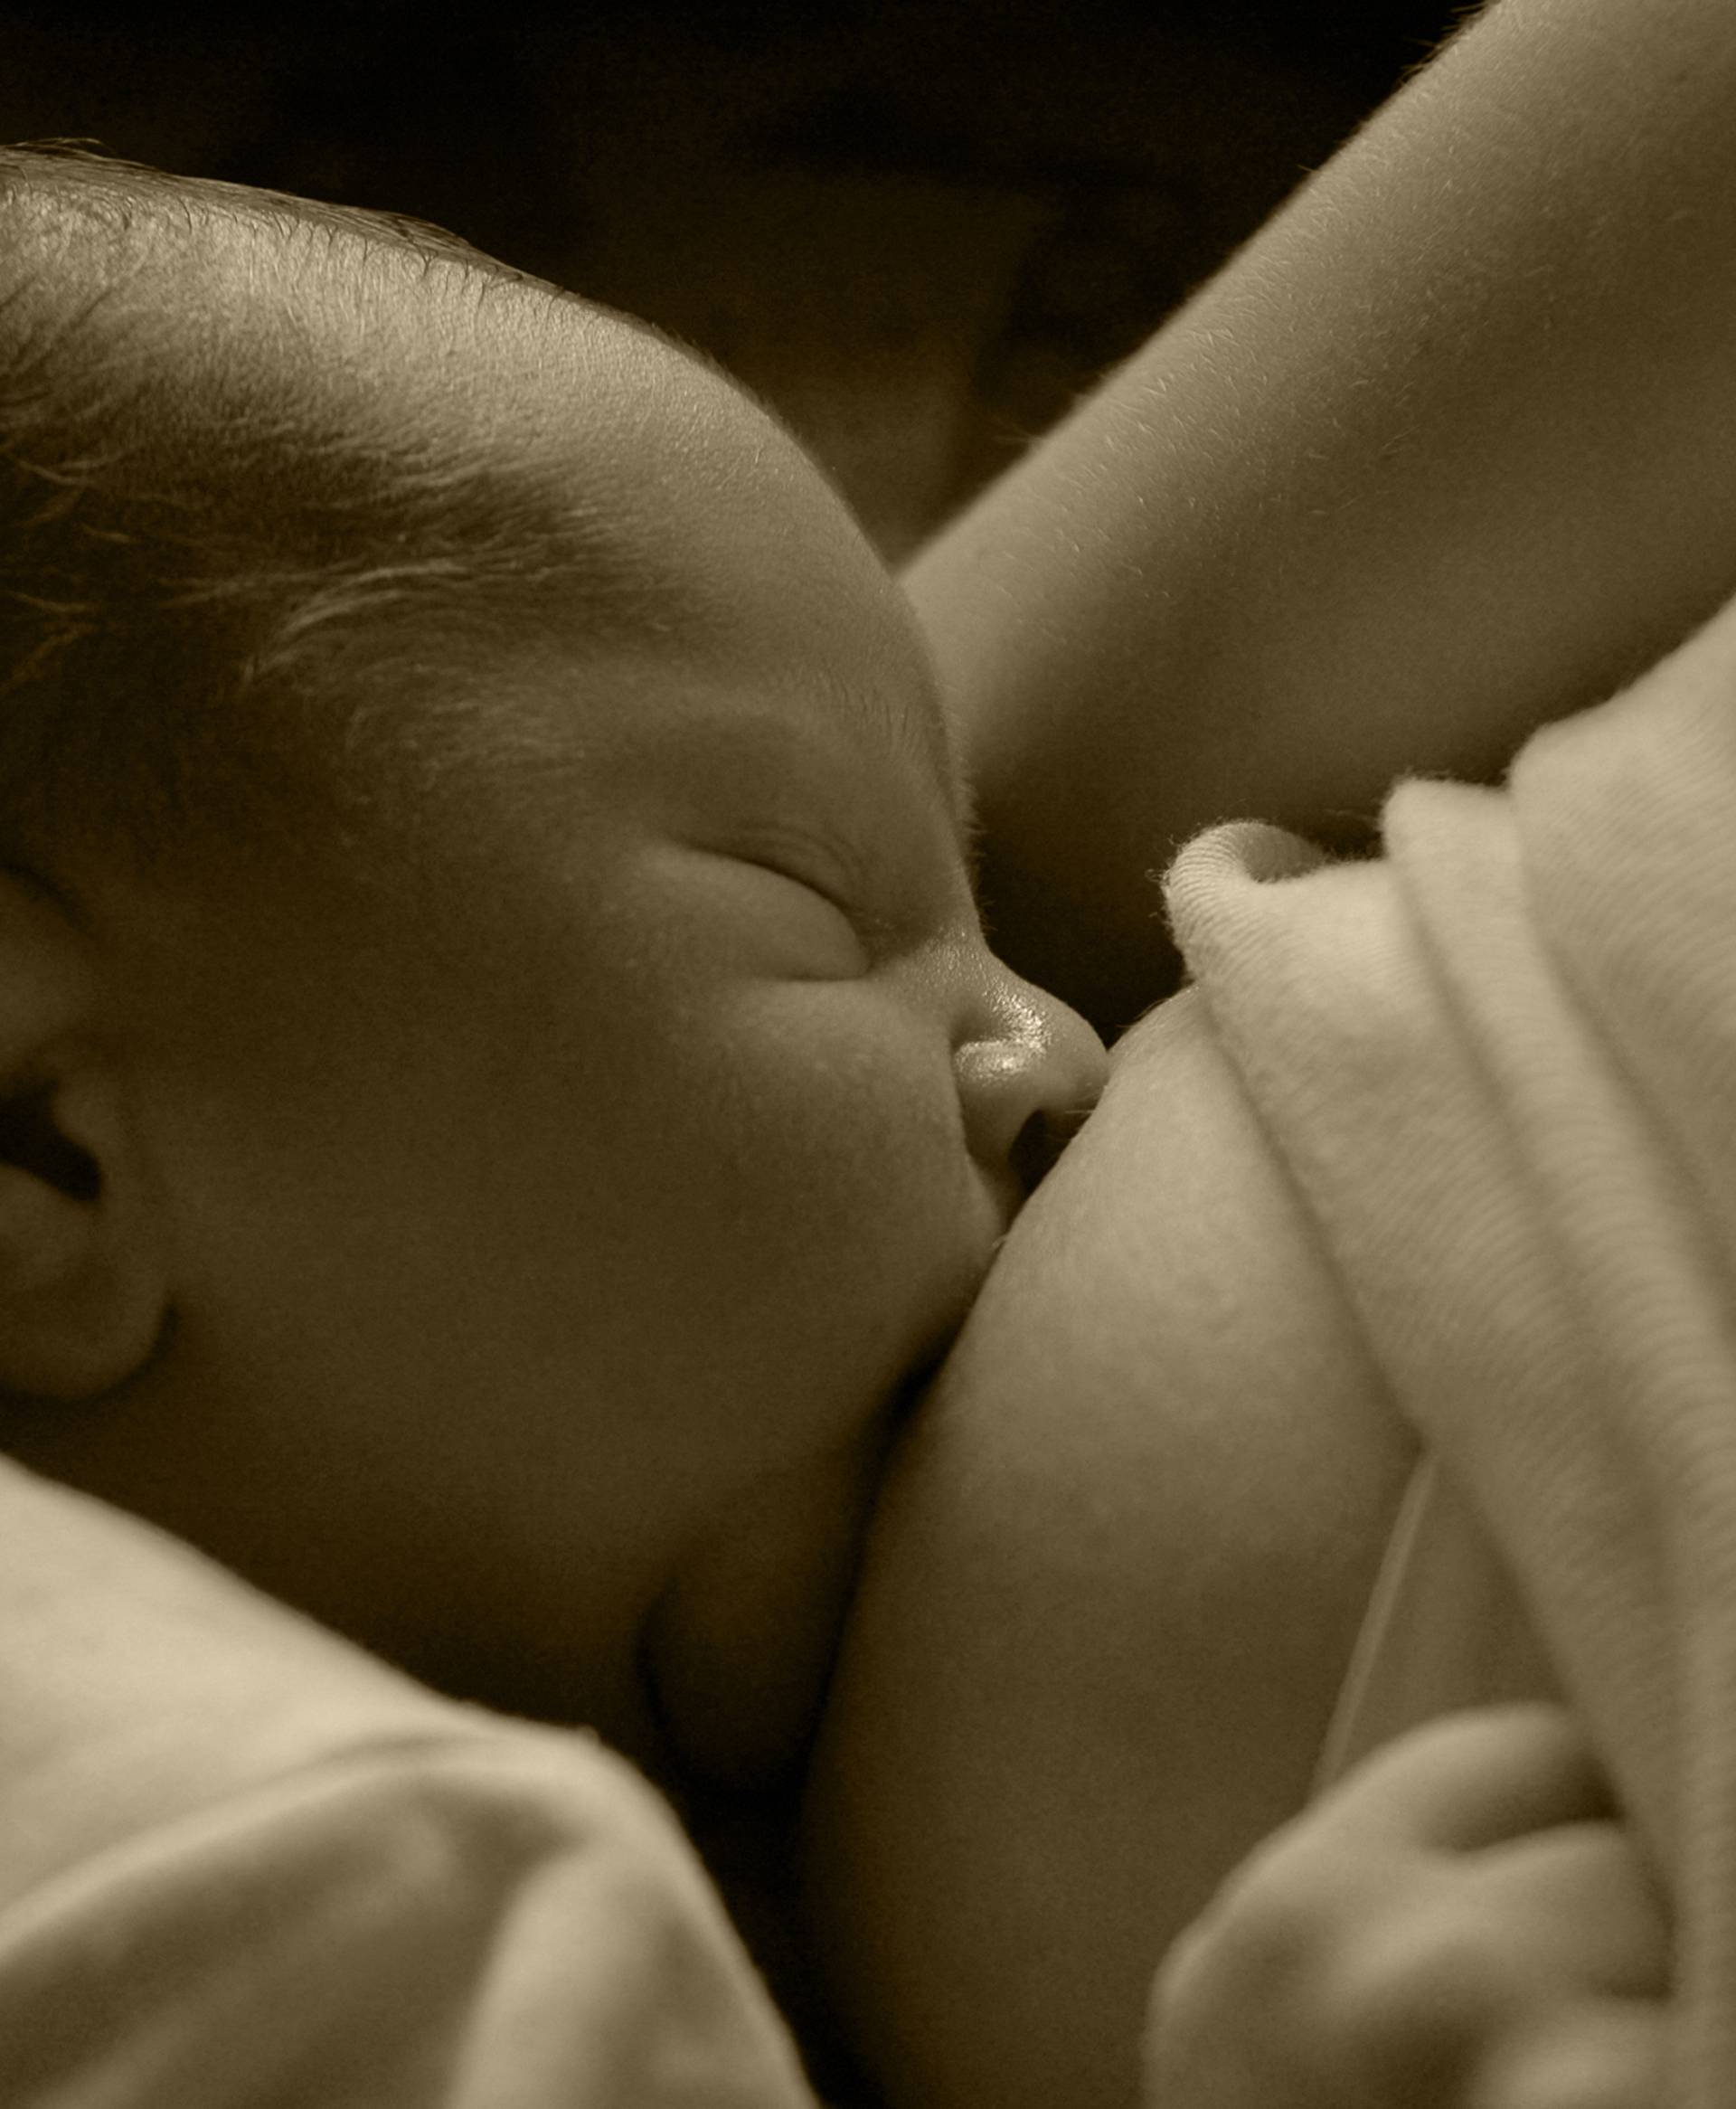 Dojenje bebu čuva od upale a majku od karcinoma maternice